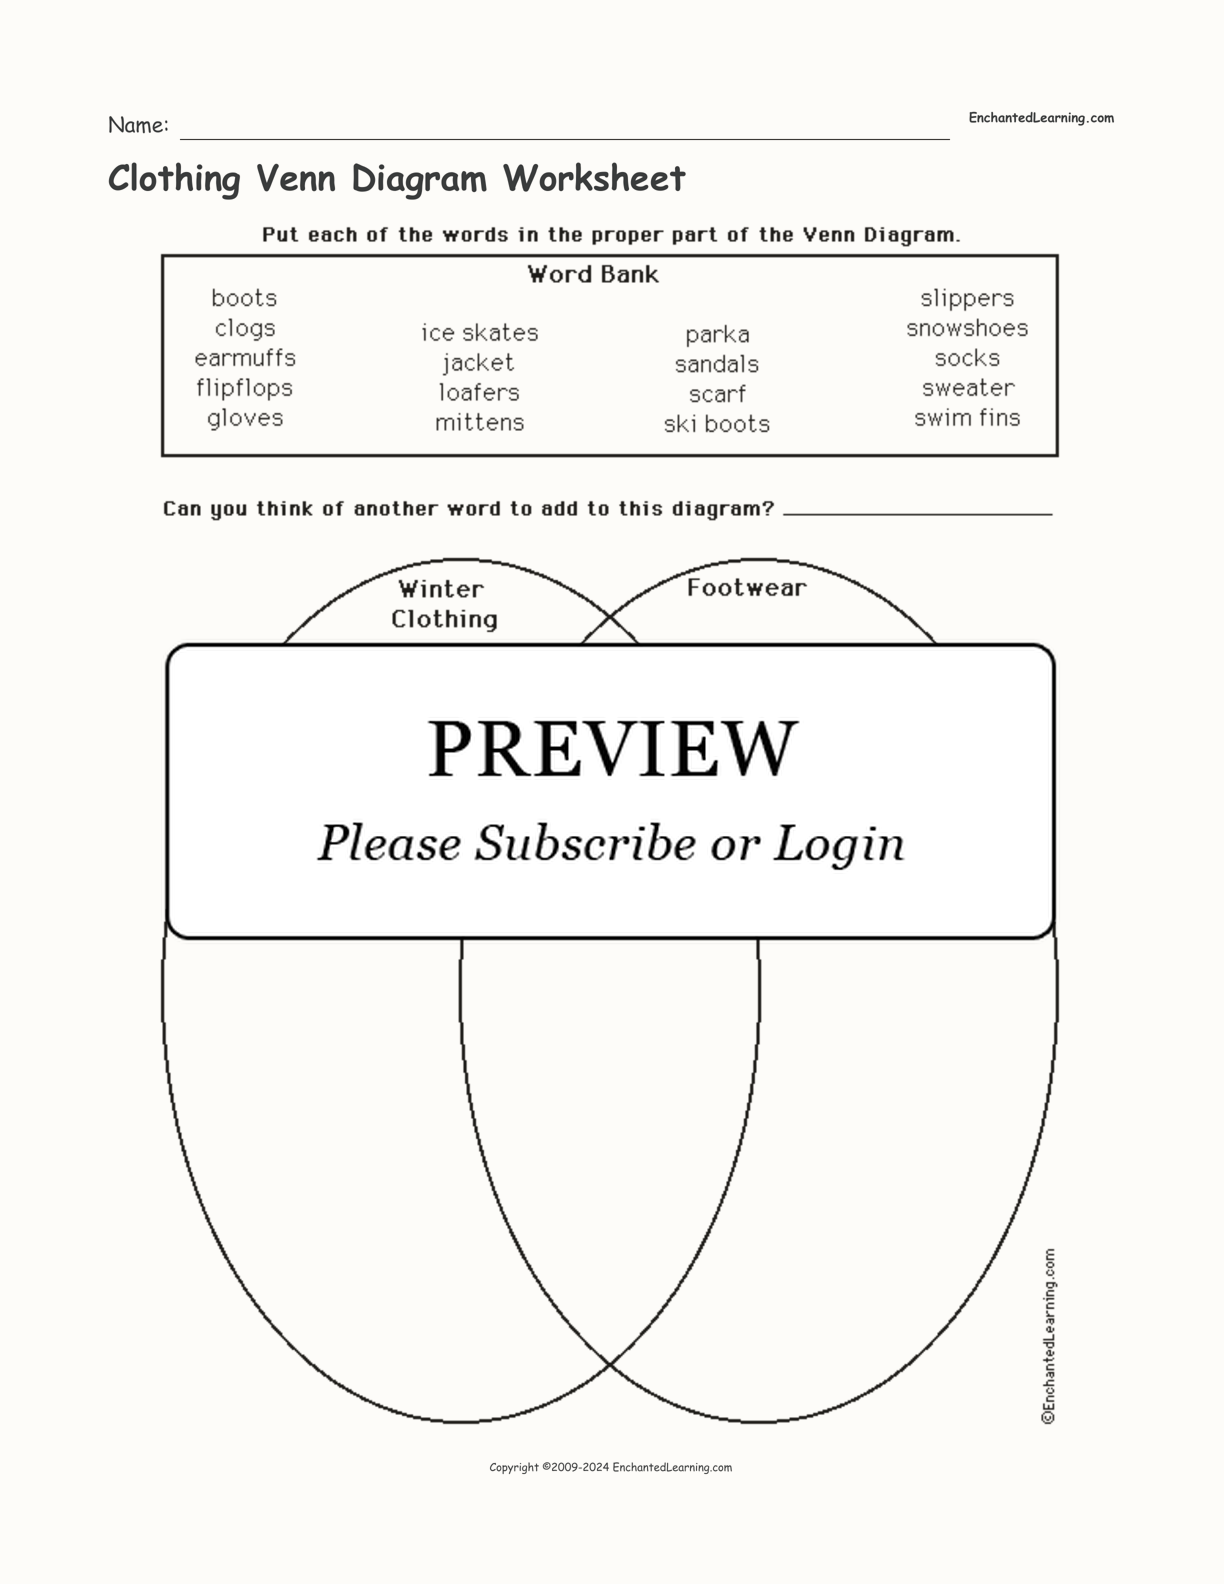 Clothing Venn Diagram Worksheet interactive worksheet page 1